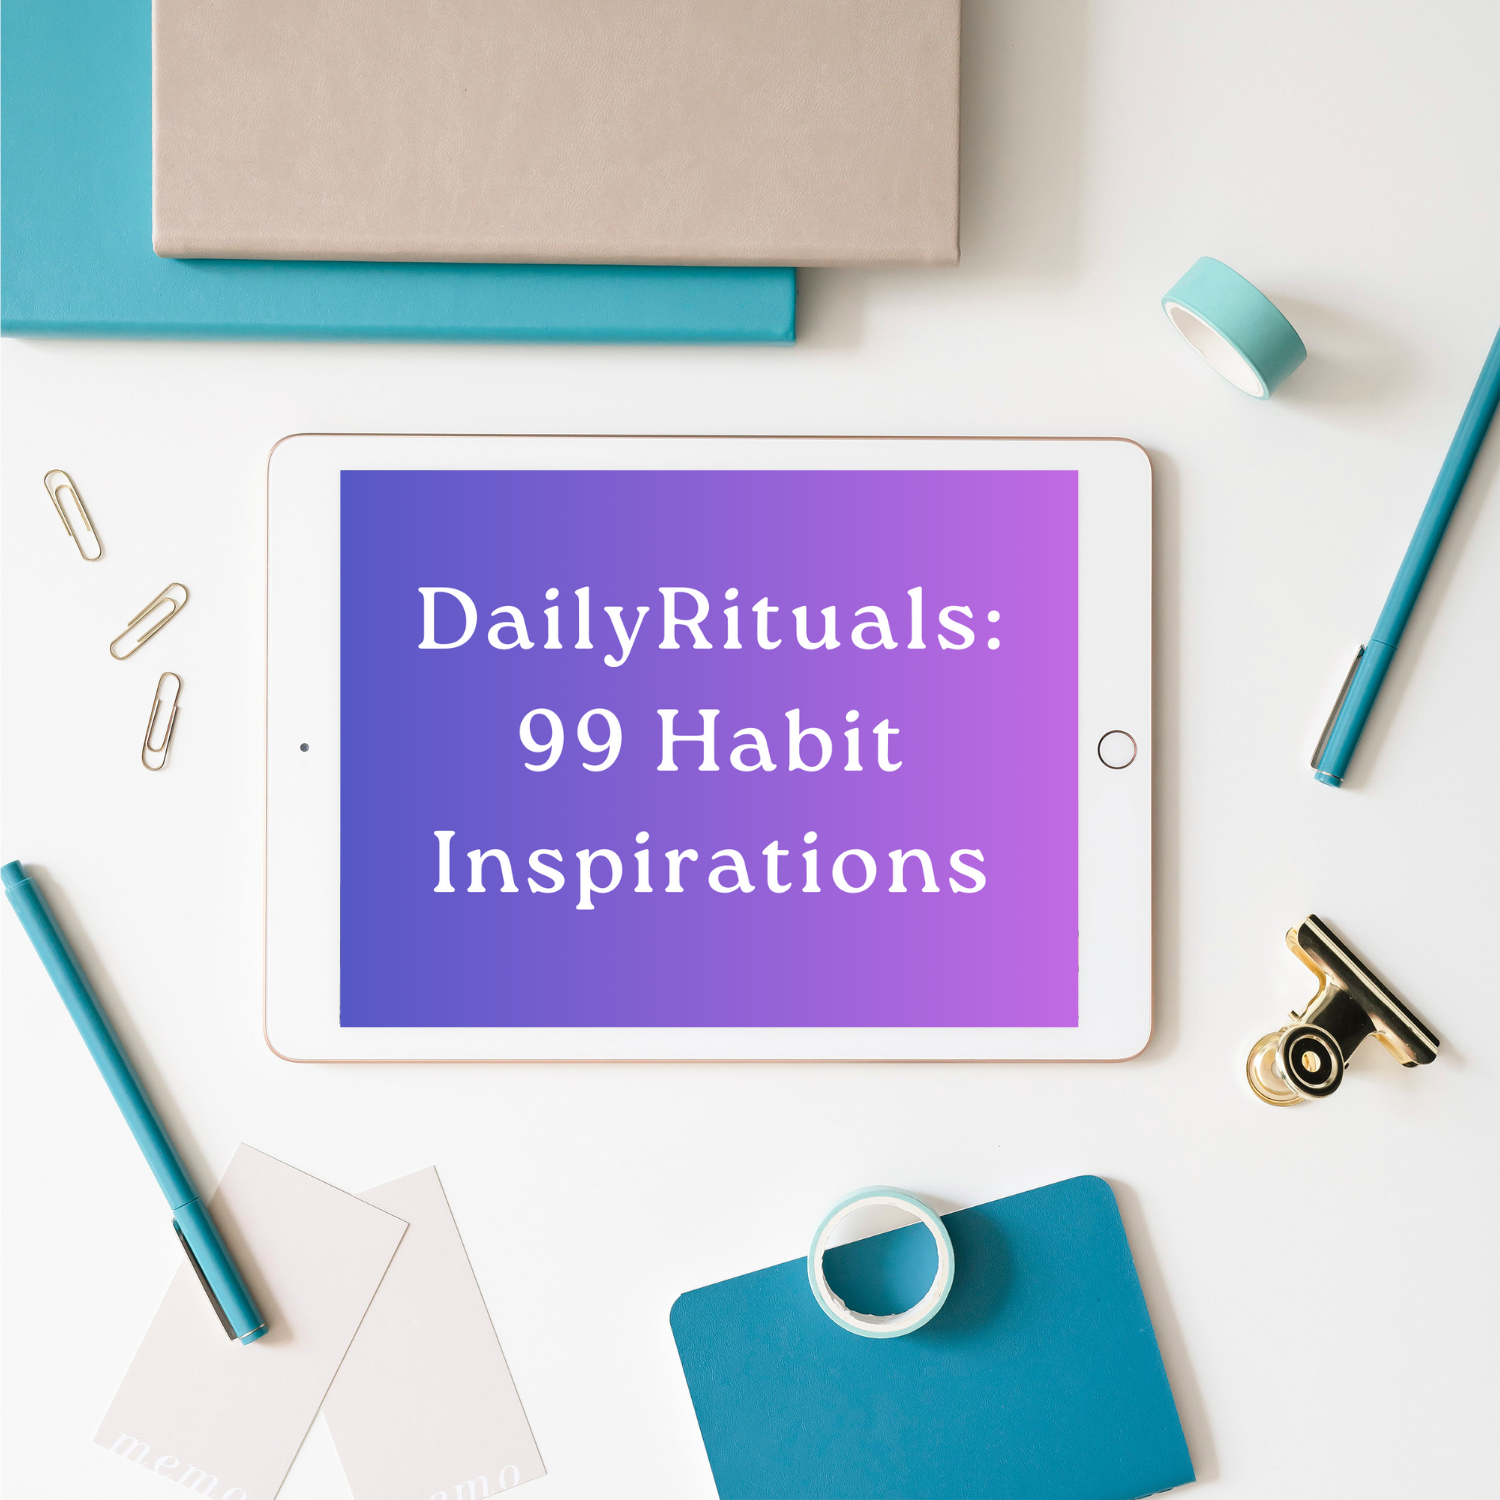 Daily Rituals: 99 Habit Inspirations